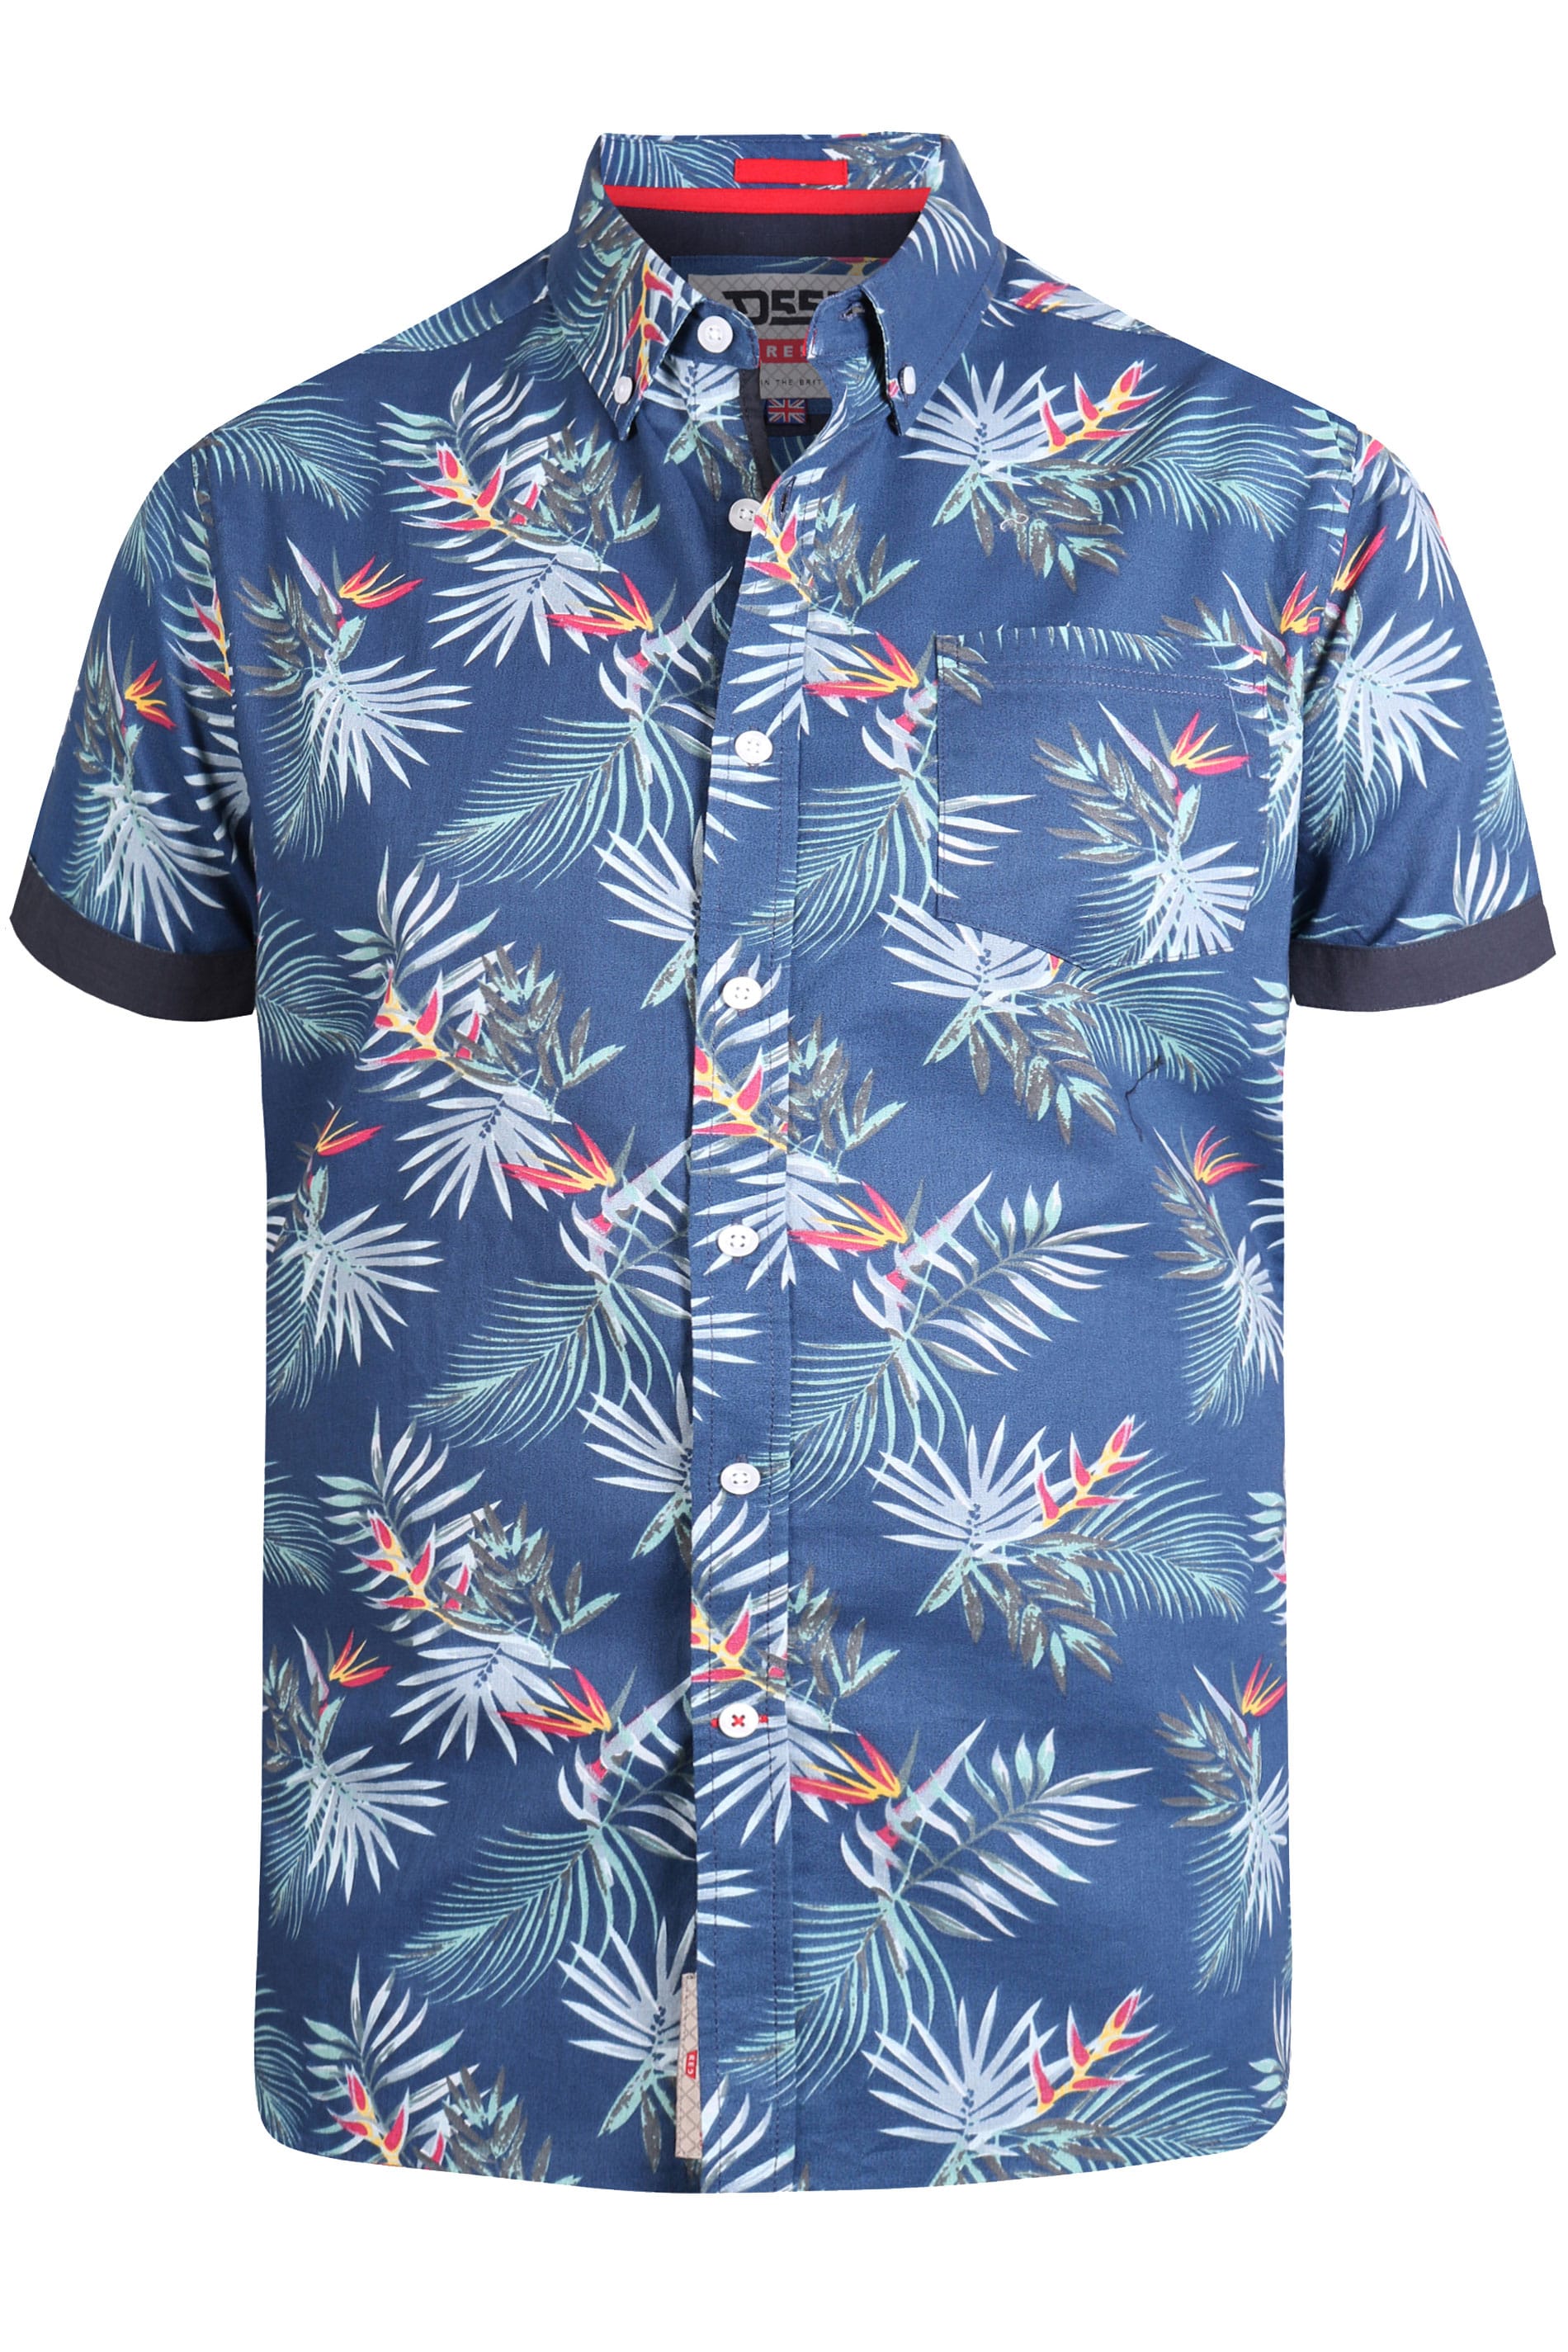 D555 Navy Hawaiian Shirt | BadRhino | BadRhino